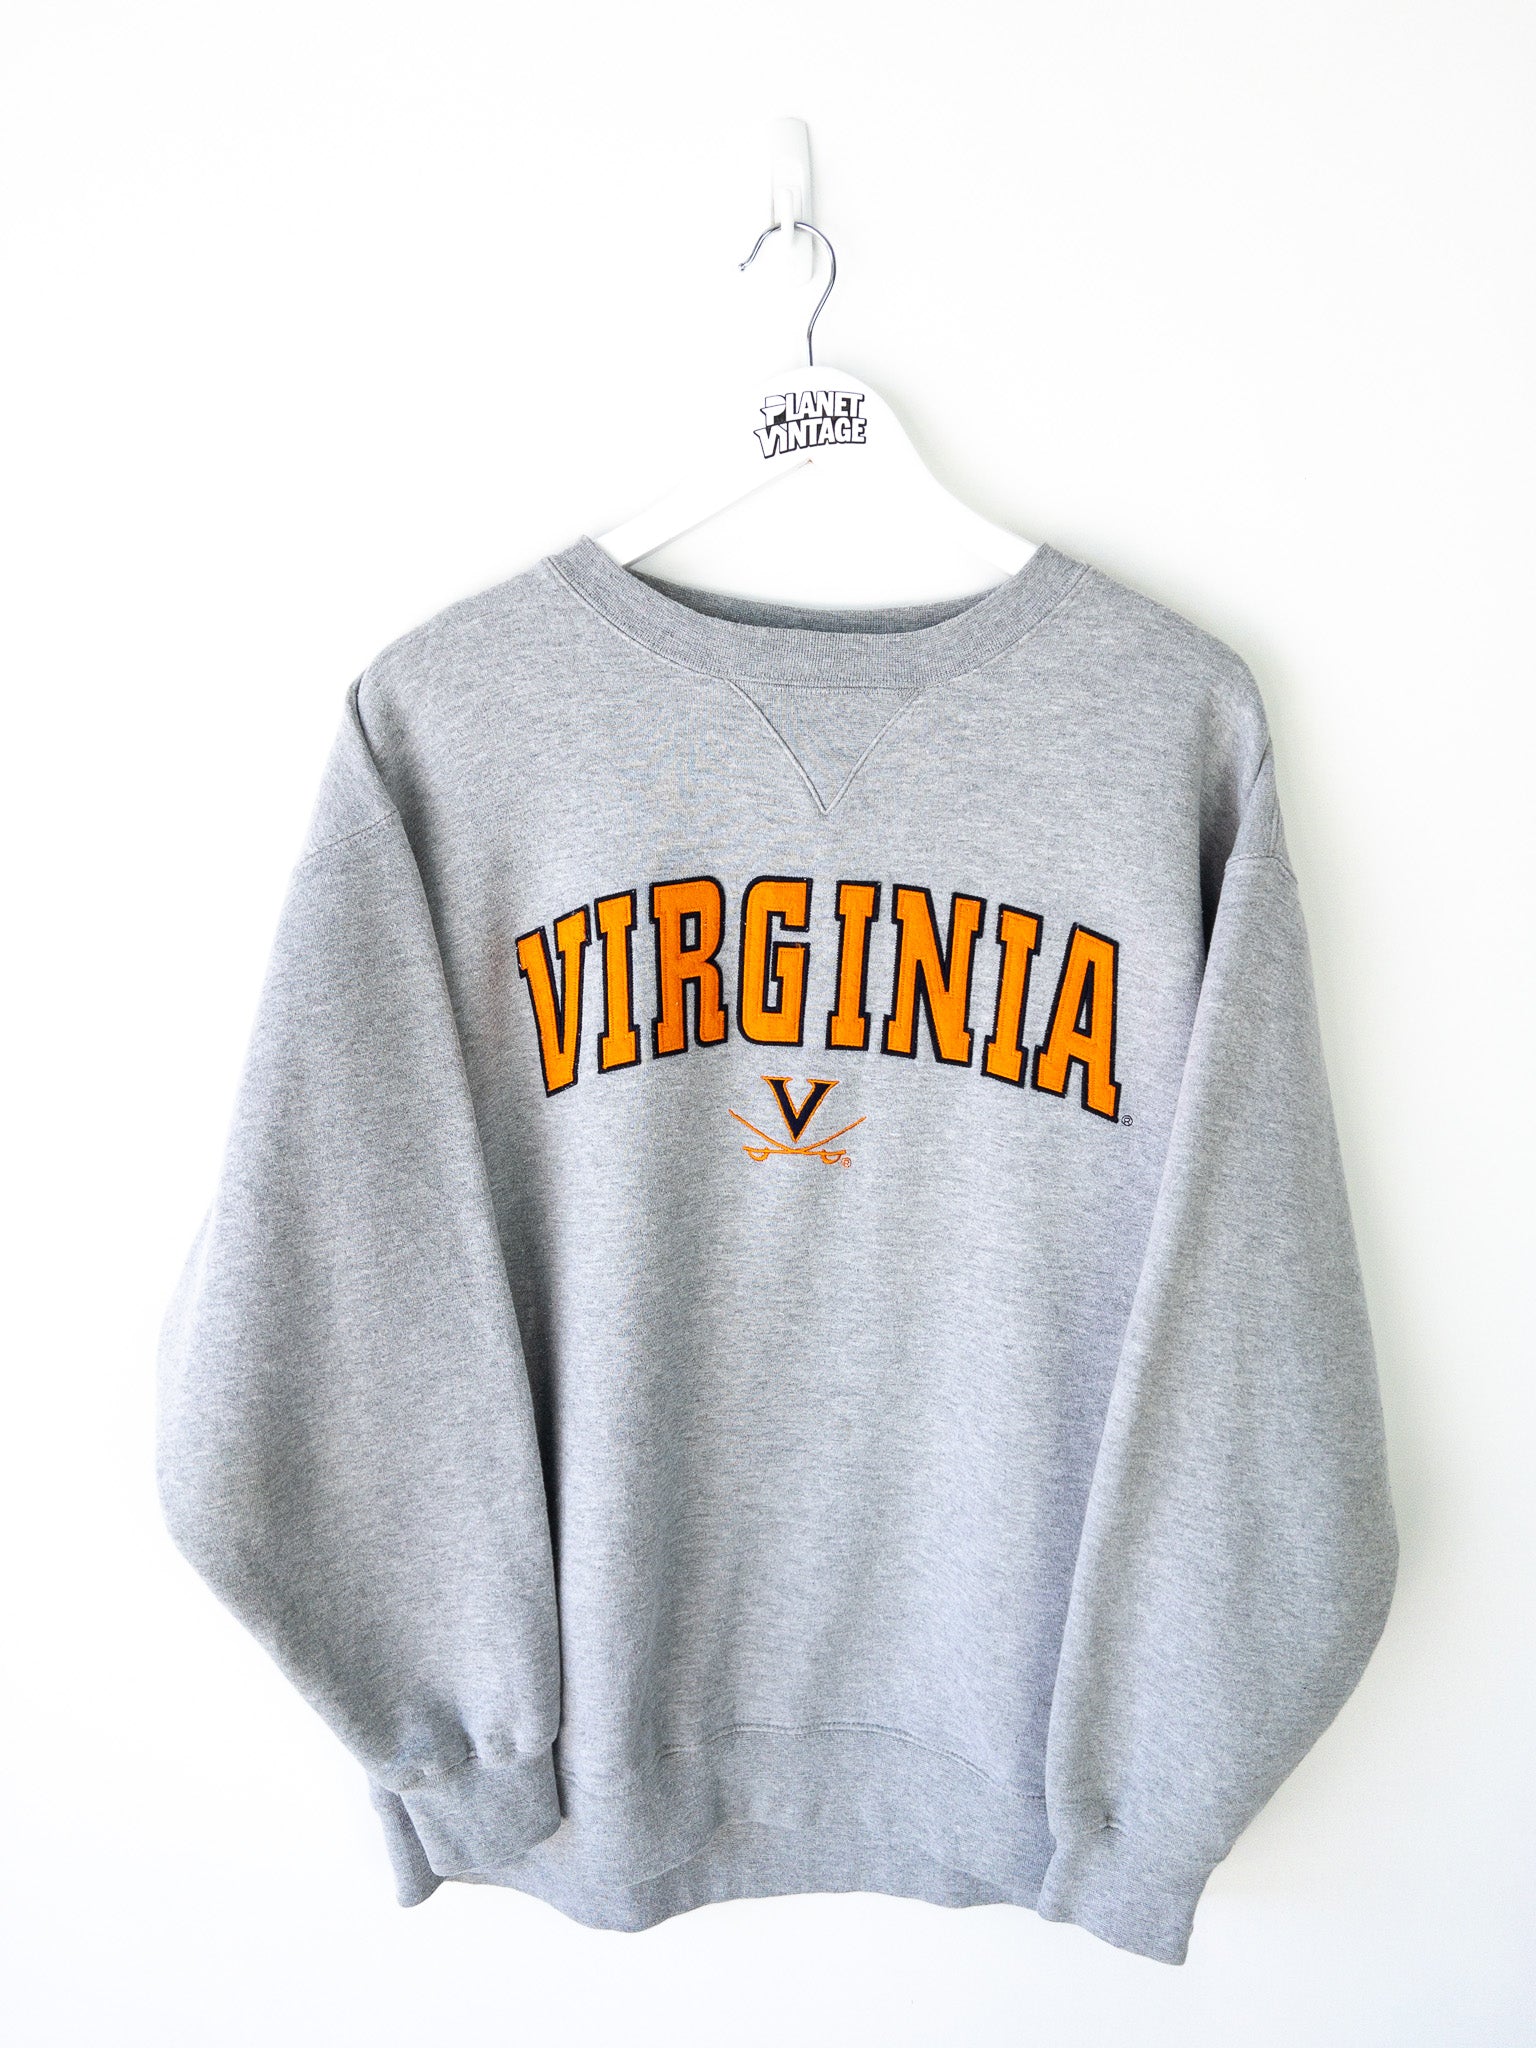 Vintage Virginia Cavaliers Sweatshirt (M)